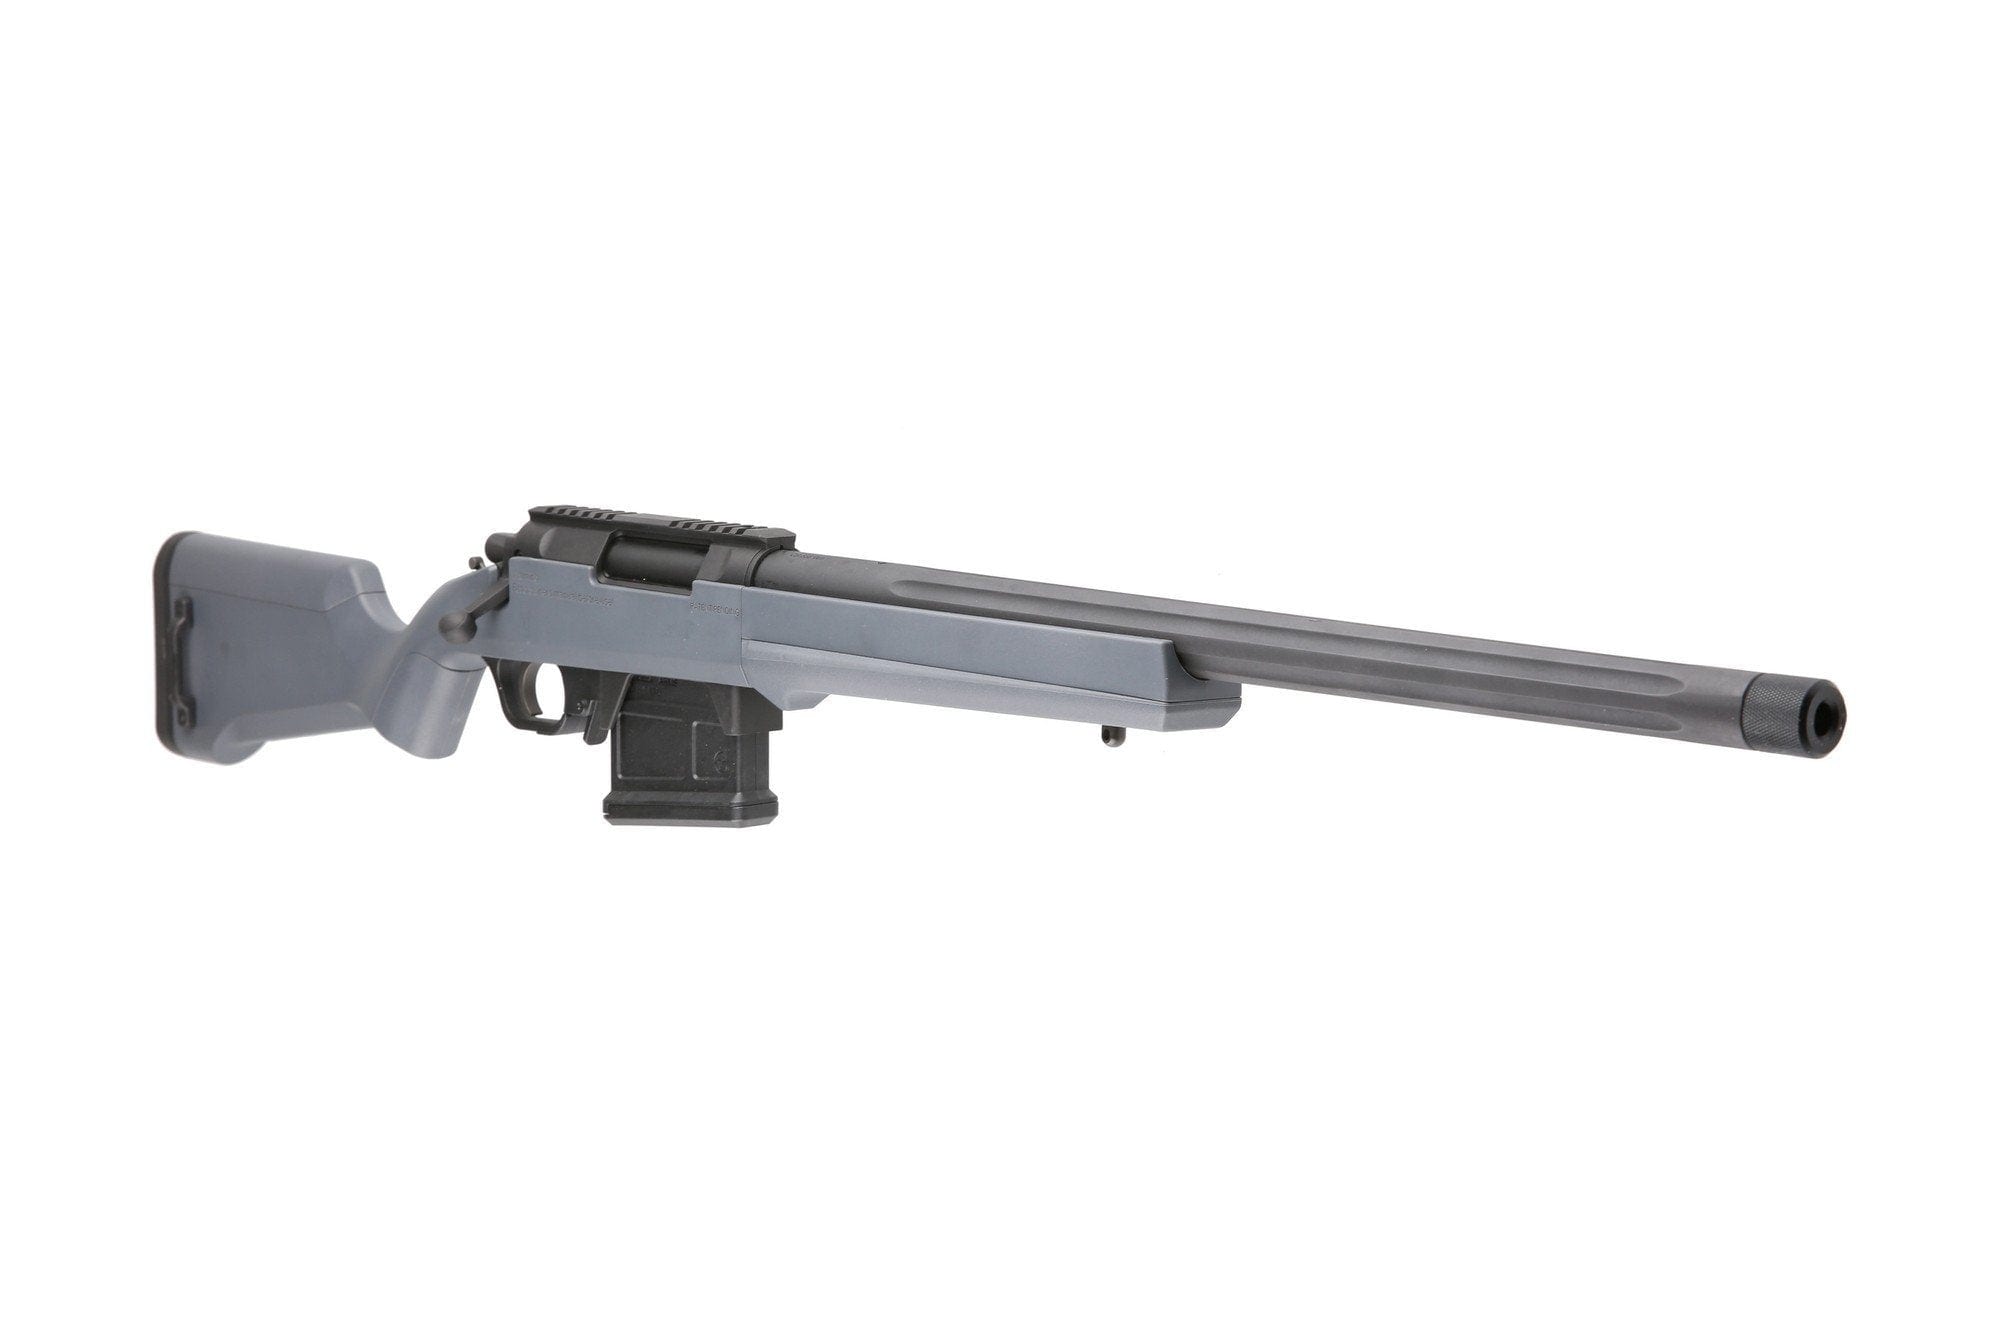 AS-01 Striker Sniper Rifle Replica - Urban Grey by AMOEBA on Airsoft Mania Europe